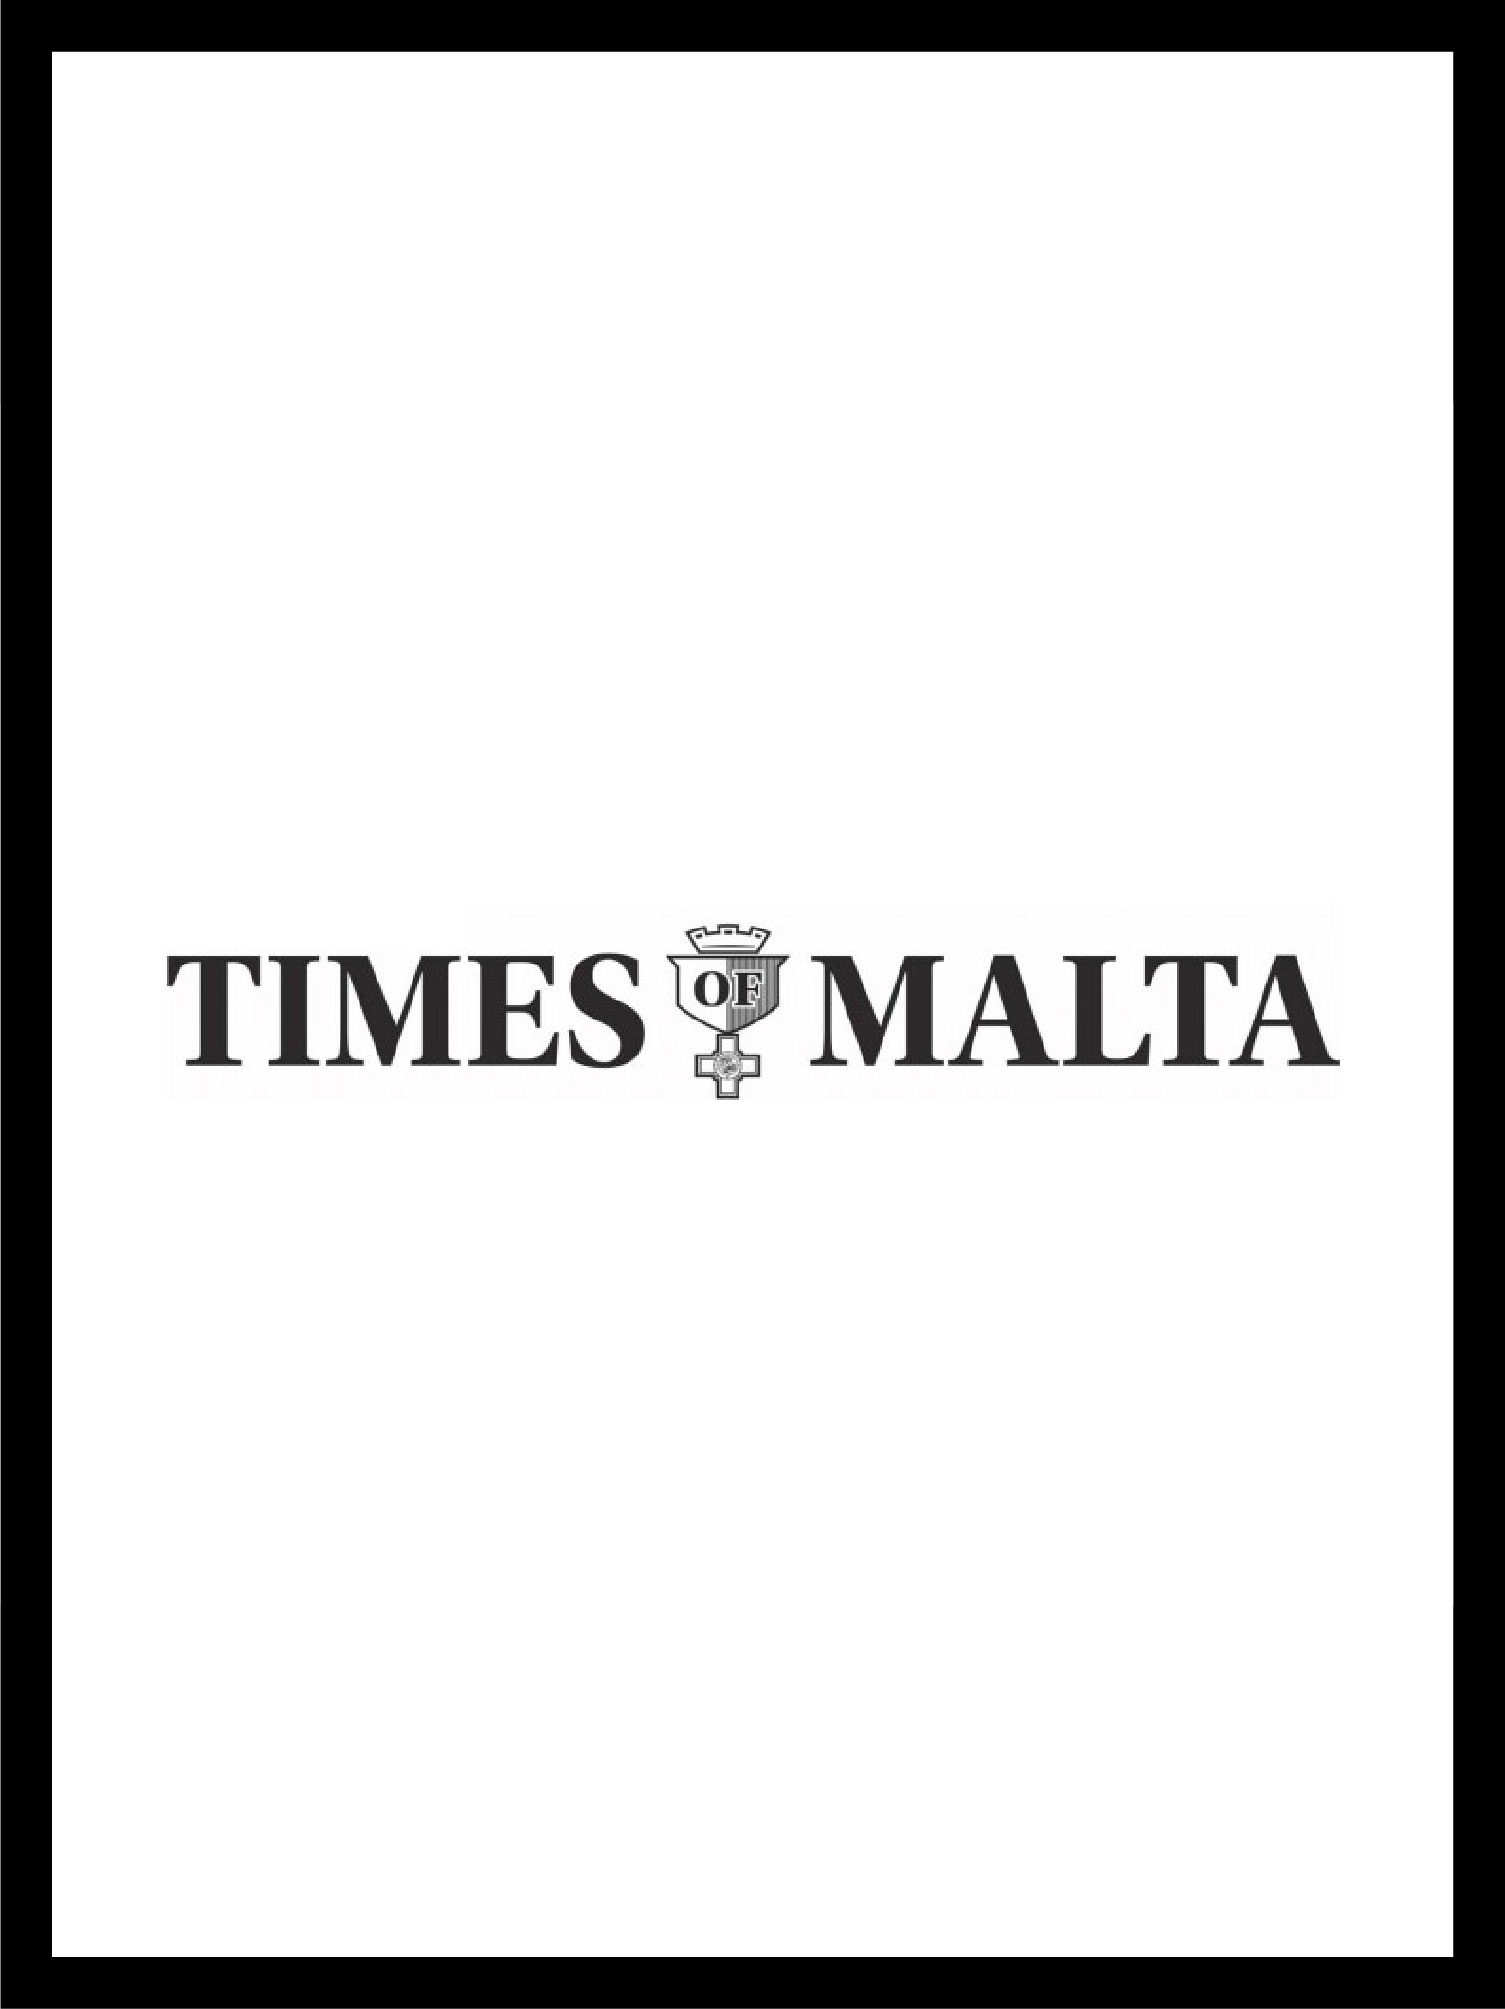 logo of the magazine times of malta